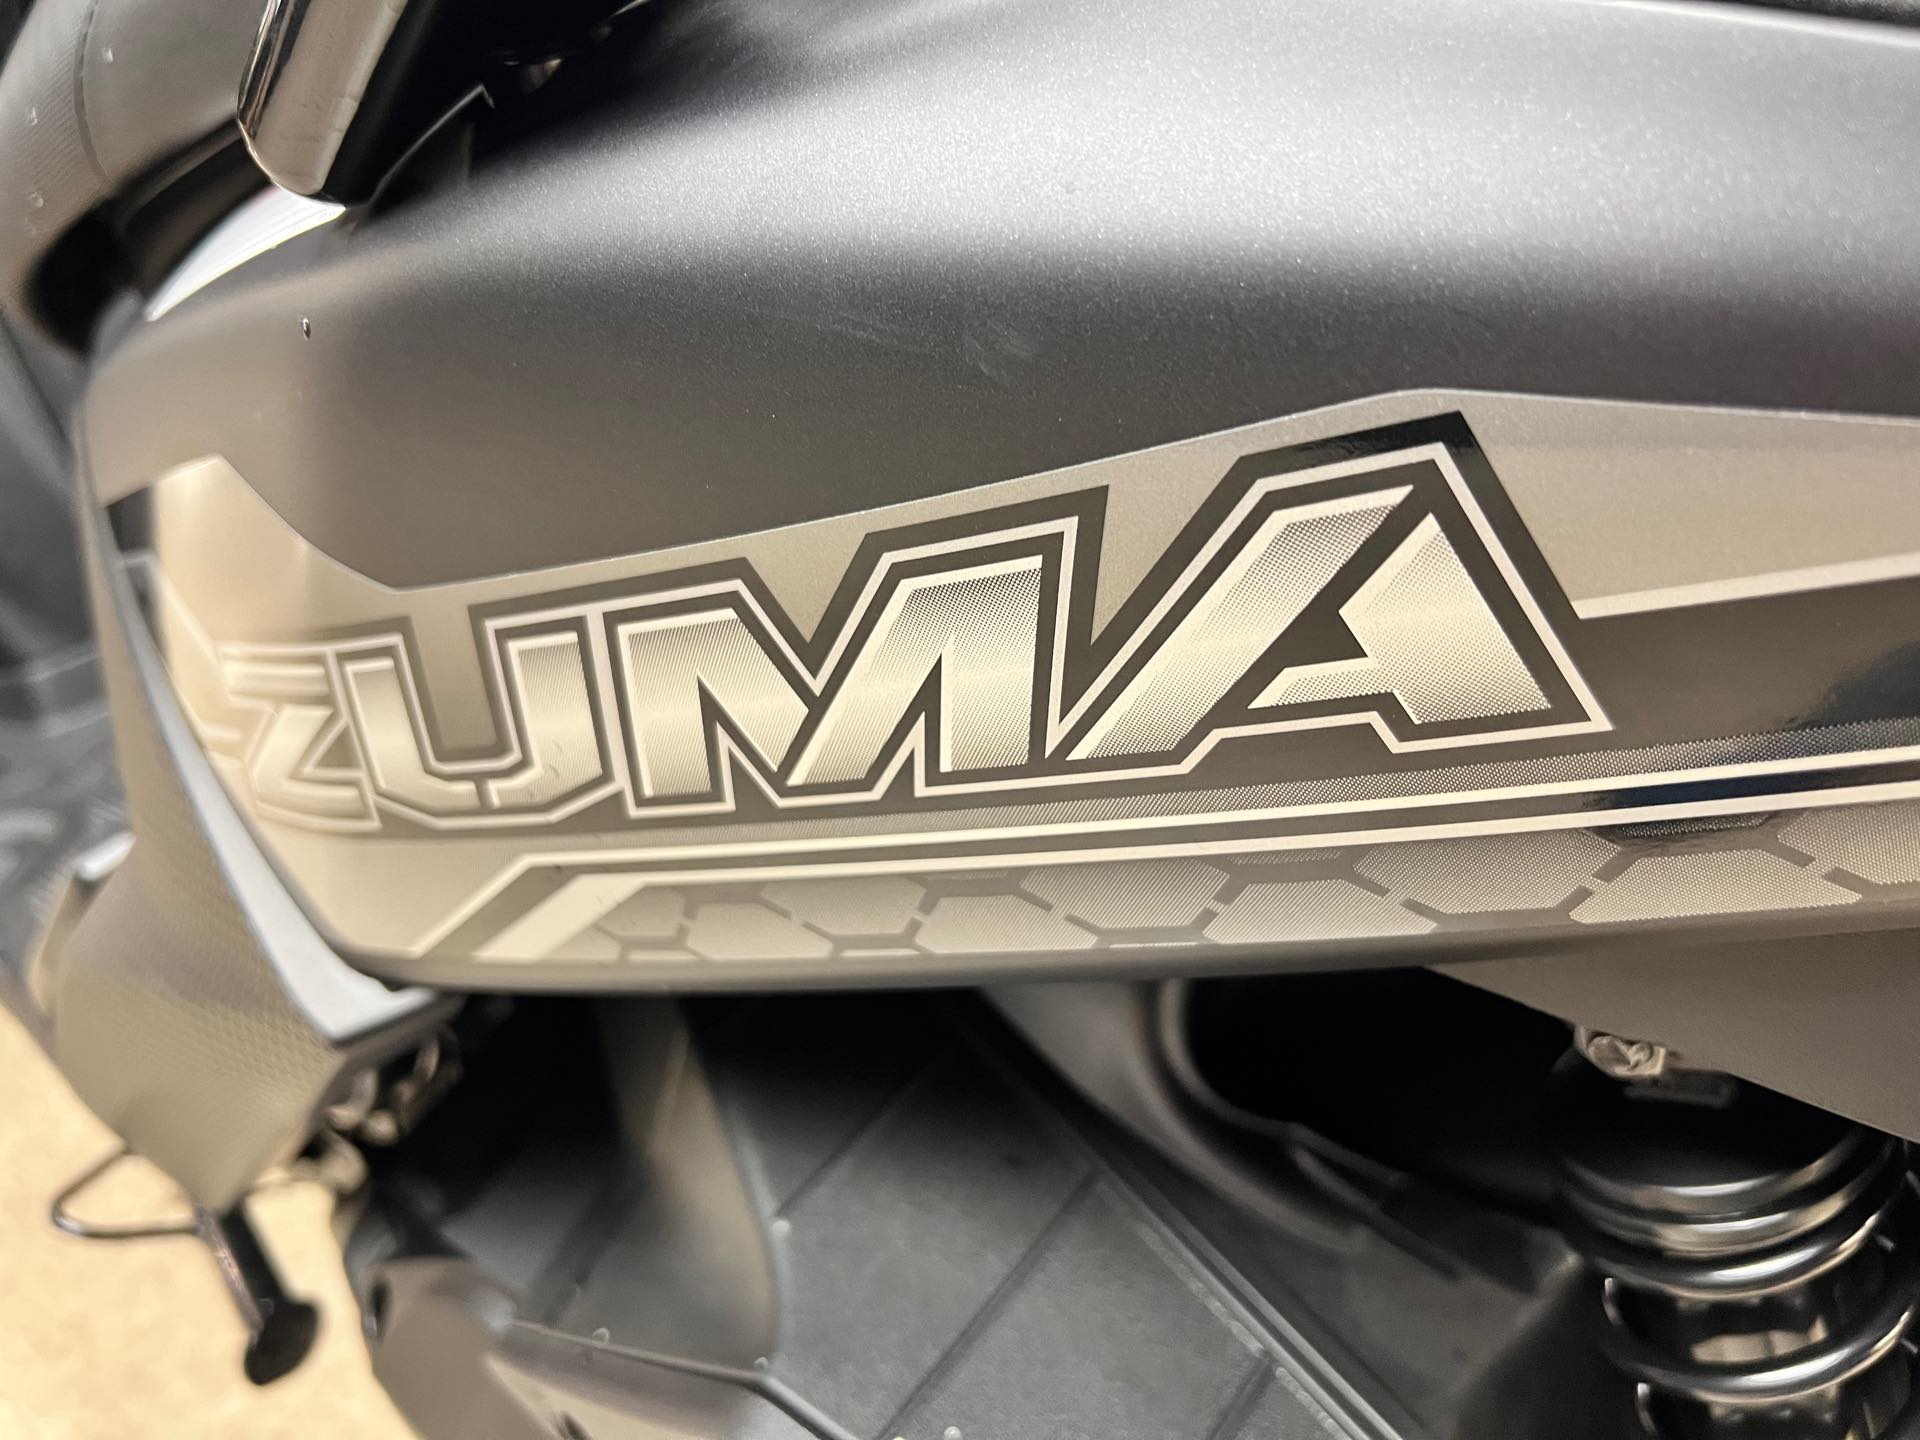 2021 Yamaha Zuma 125 at Sloans Motorcycle ATV, Murfreesboro, TN, 37129